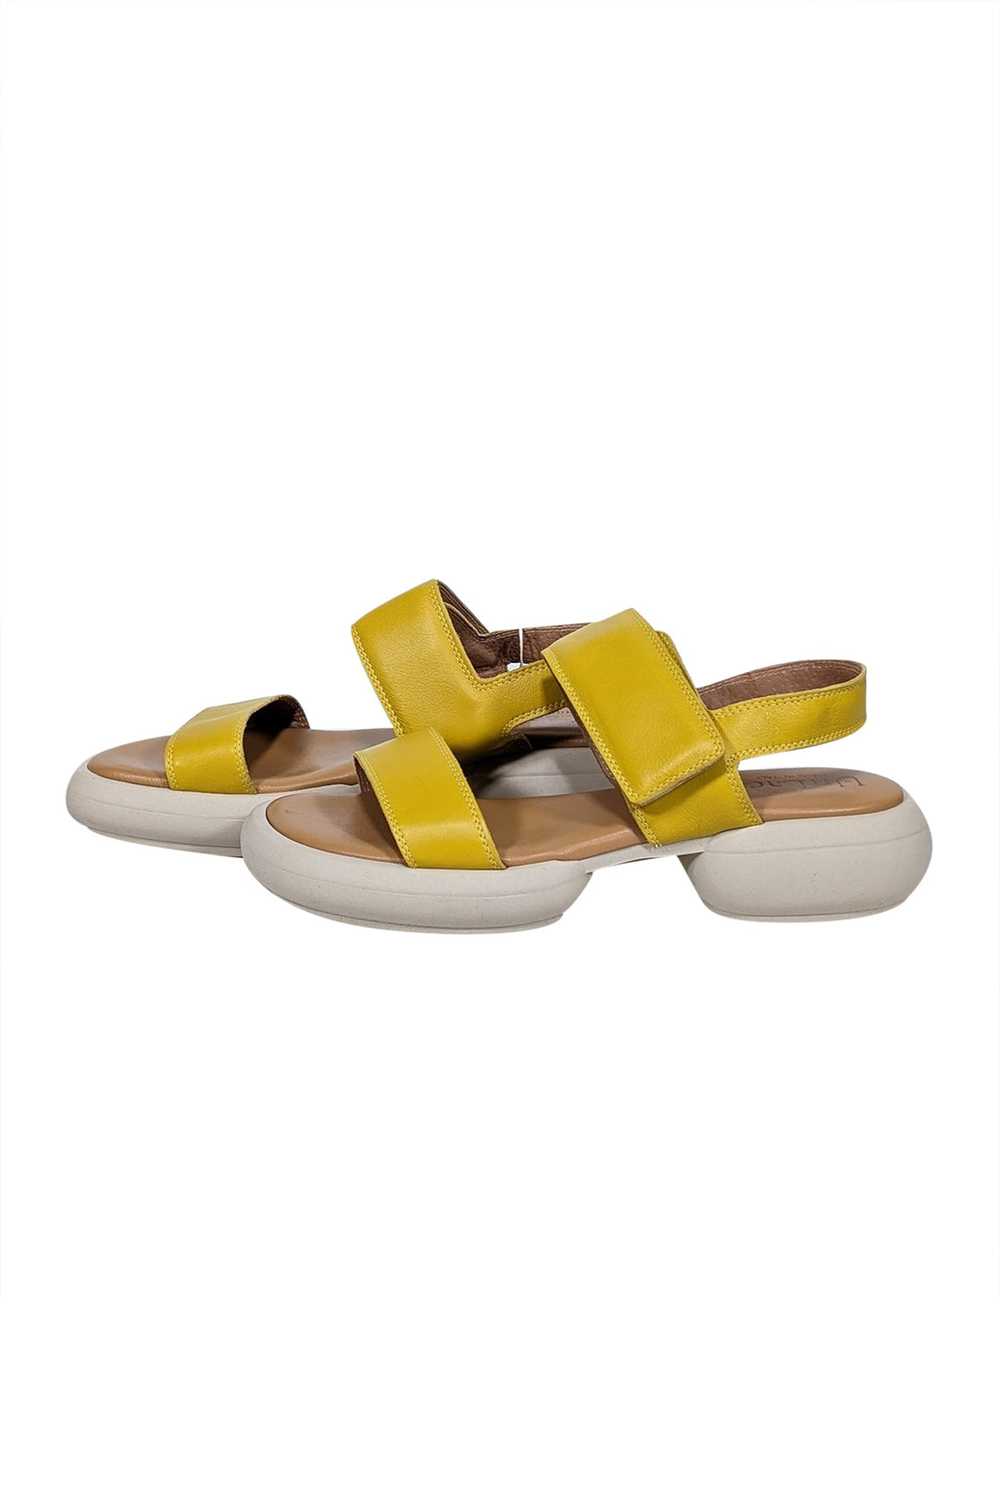 UnLace - Yellow & Cream Strappy Sandals Sz 10 - image 3